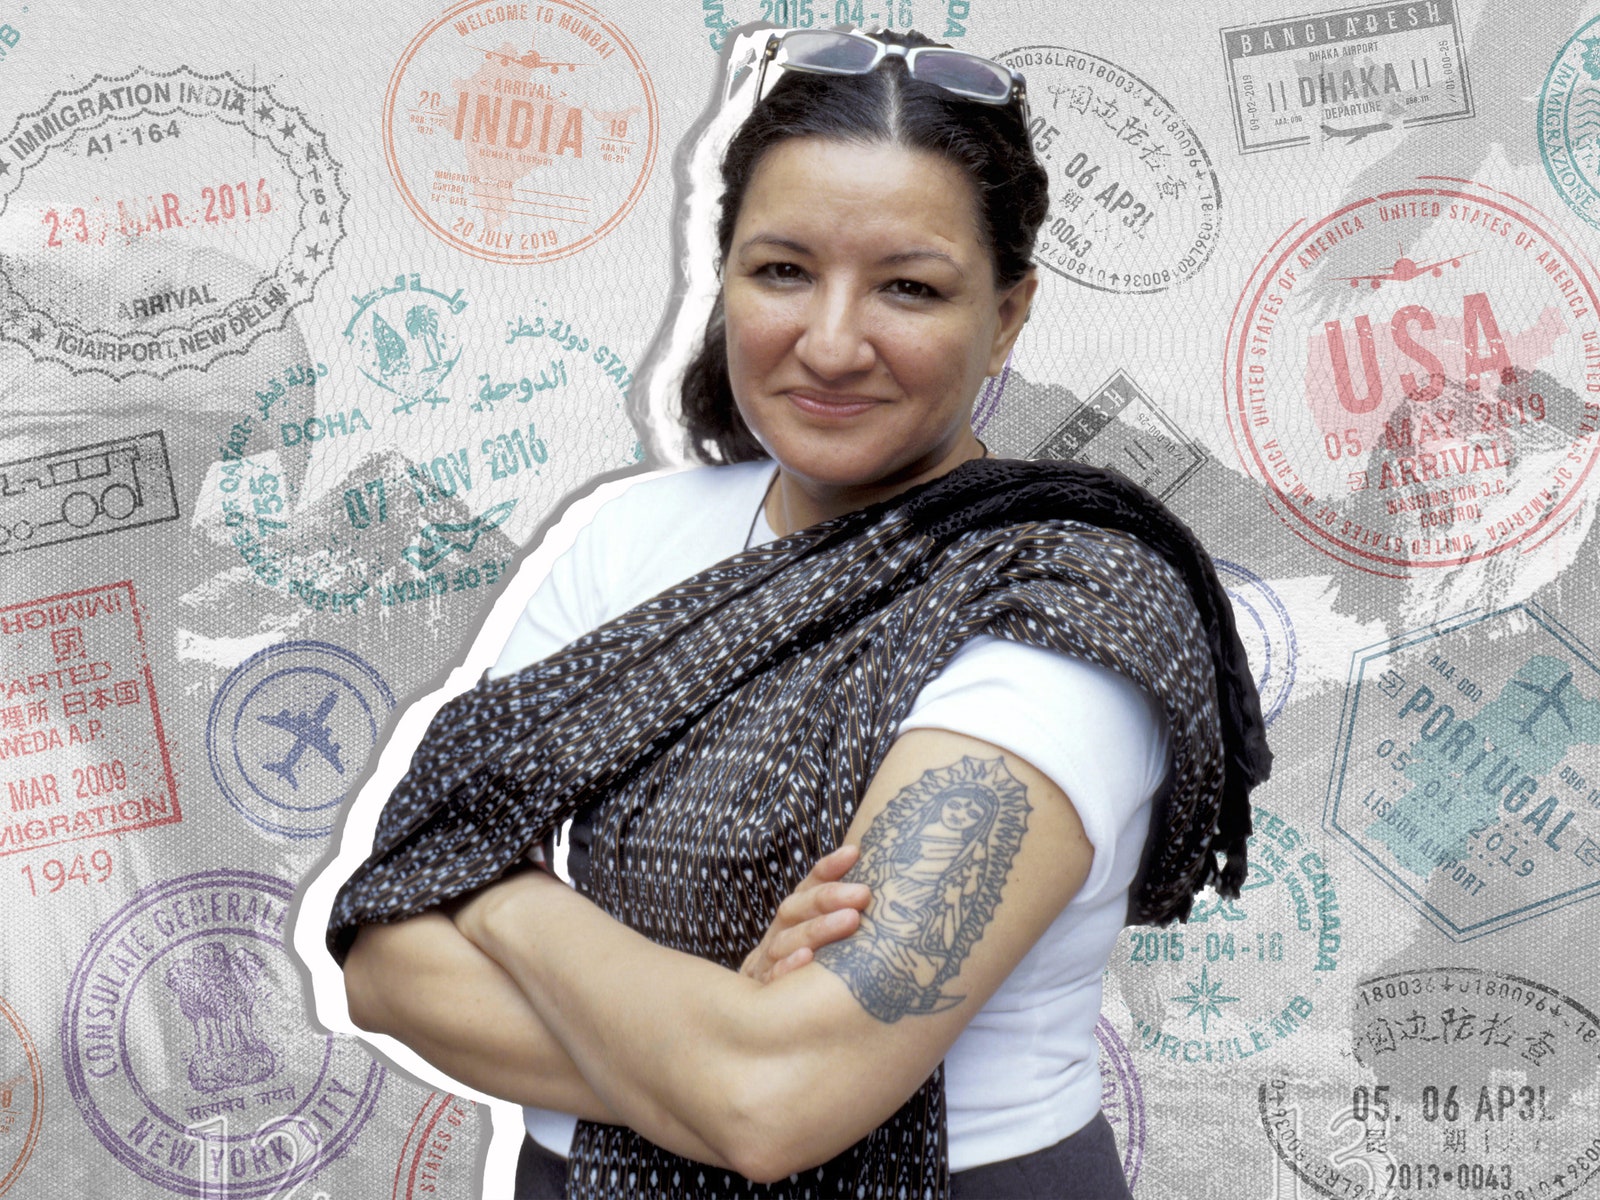 How I Travel: Sandra Cisneros Packs Jewelry to Embody a Character